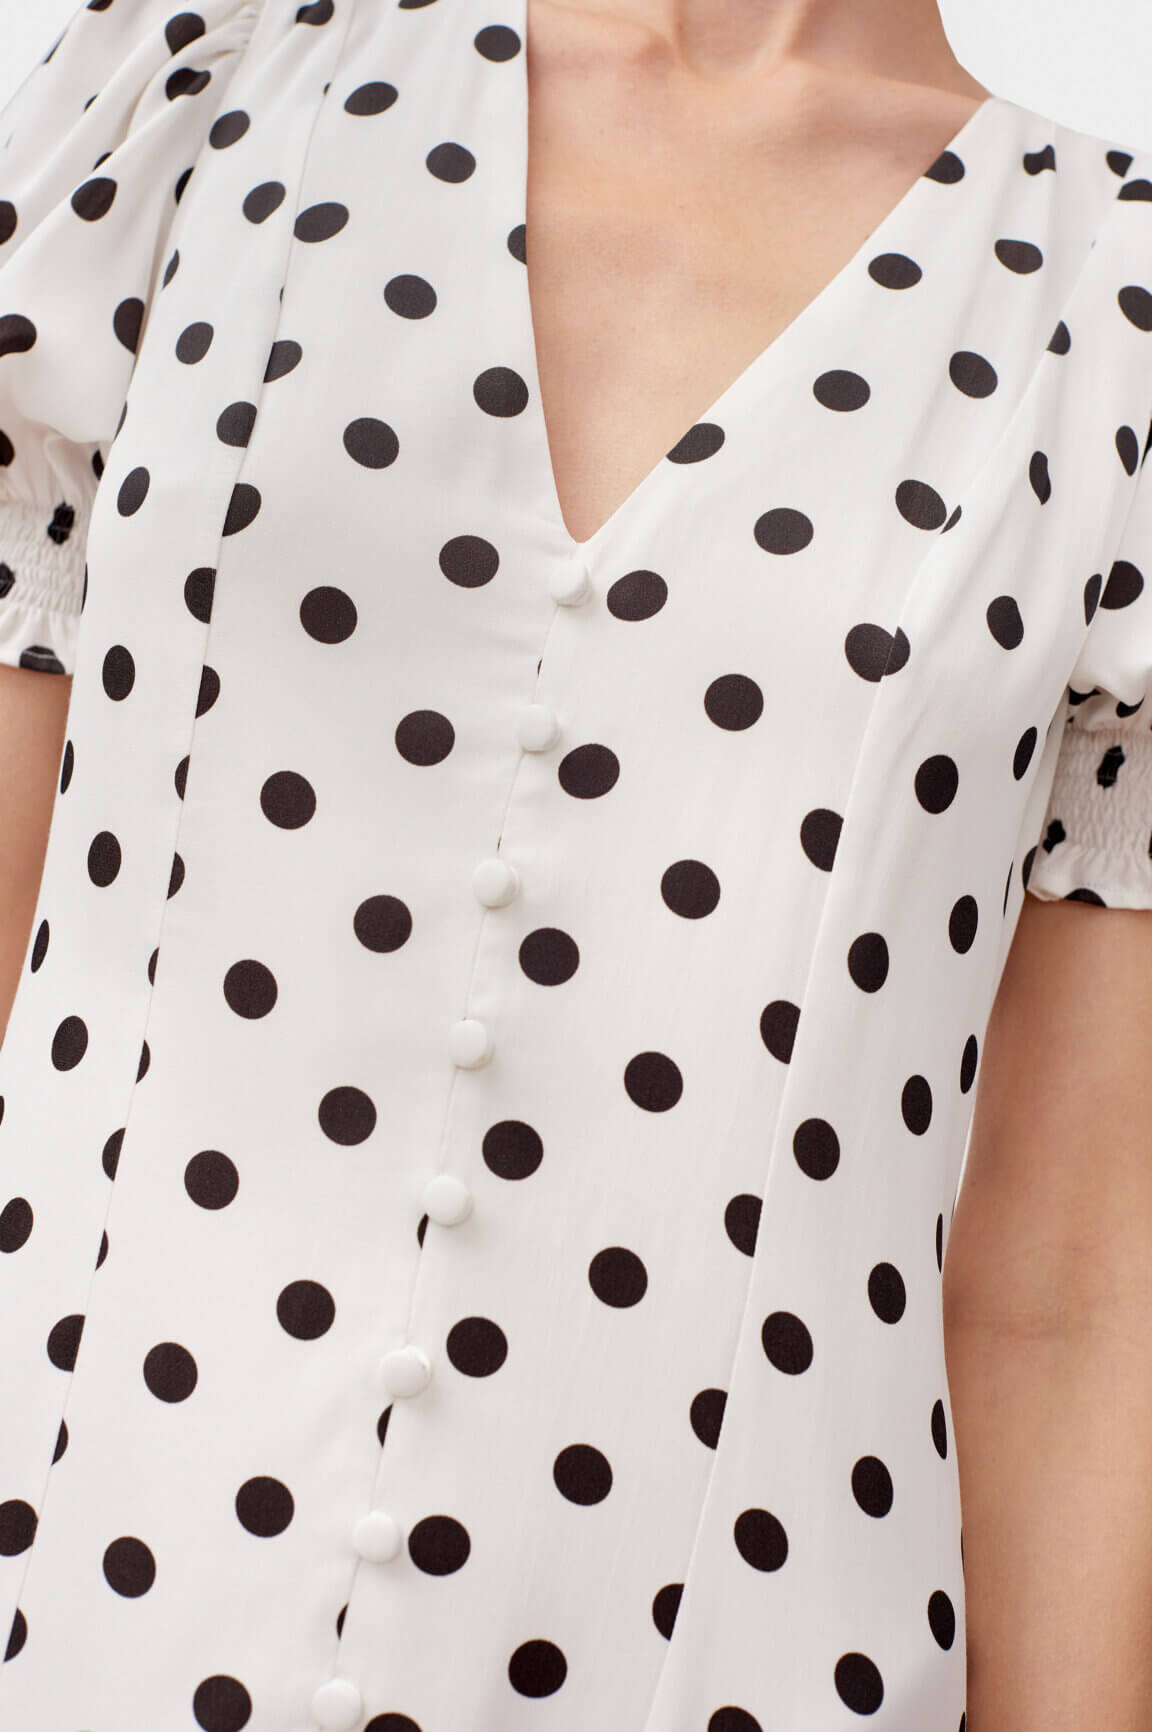 White polka dot dress | Sleeper dress with black dots